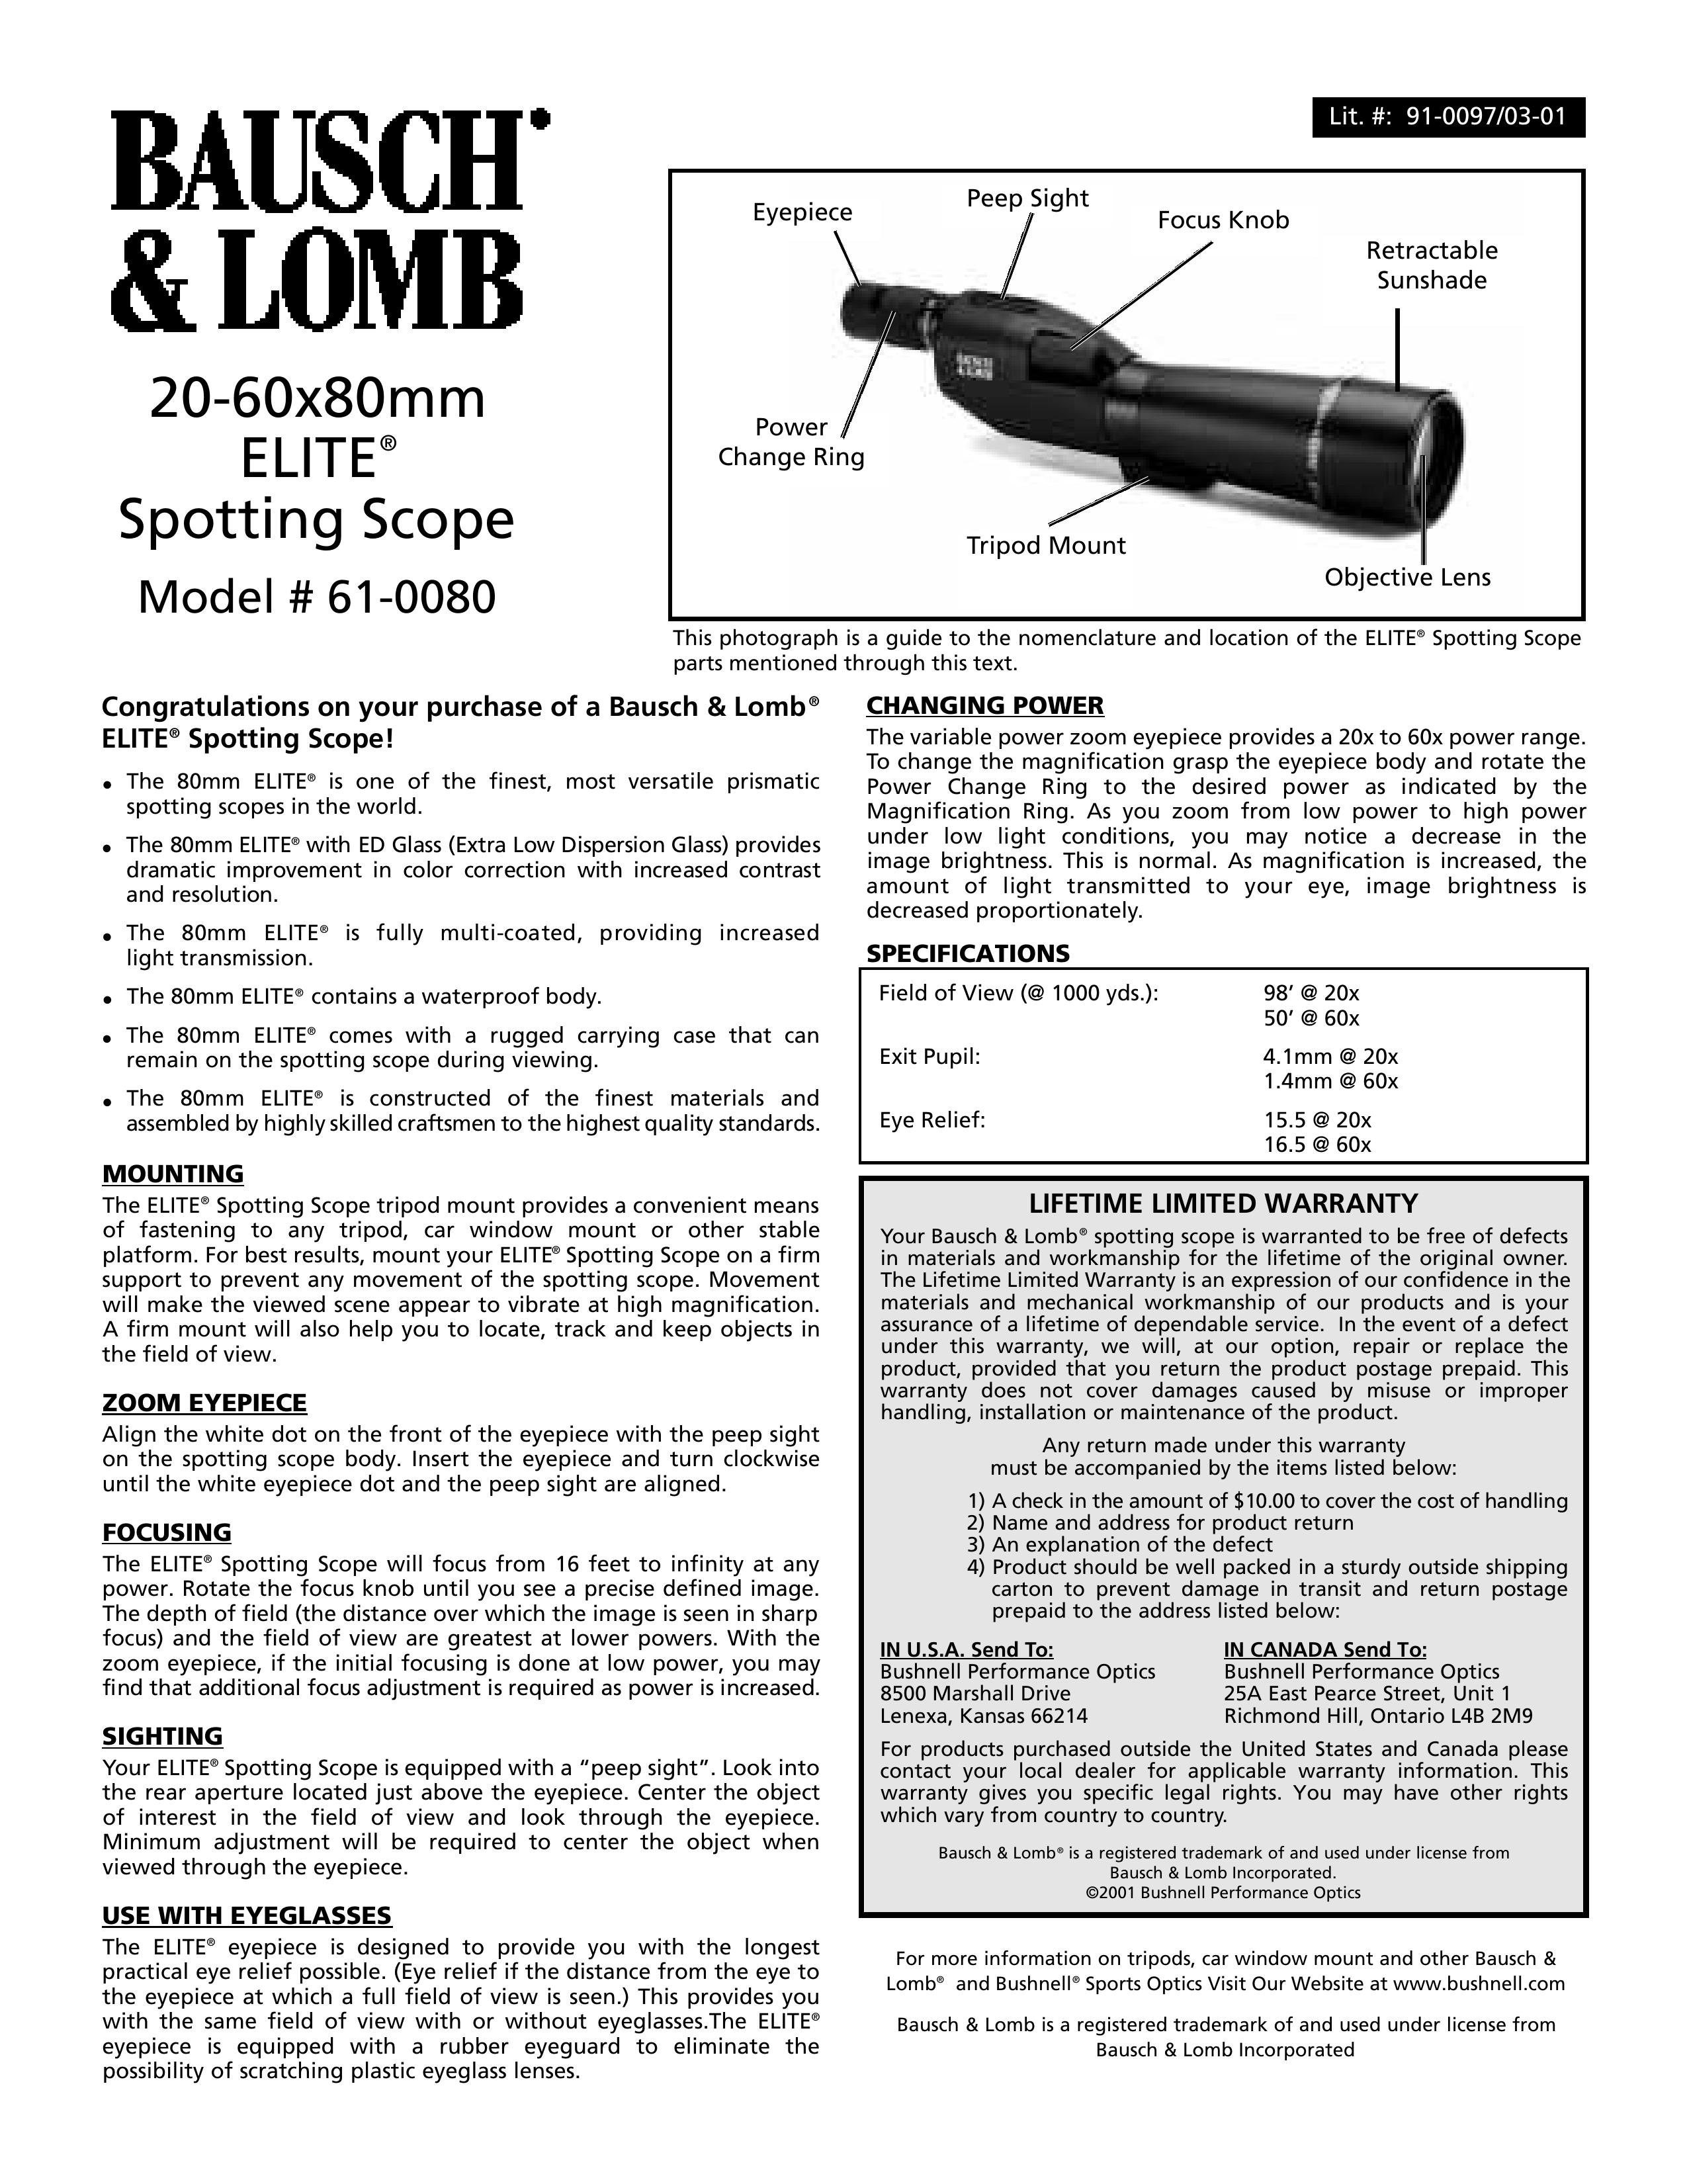 Bausch & Lomb 61-0080 Telescope User Manual